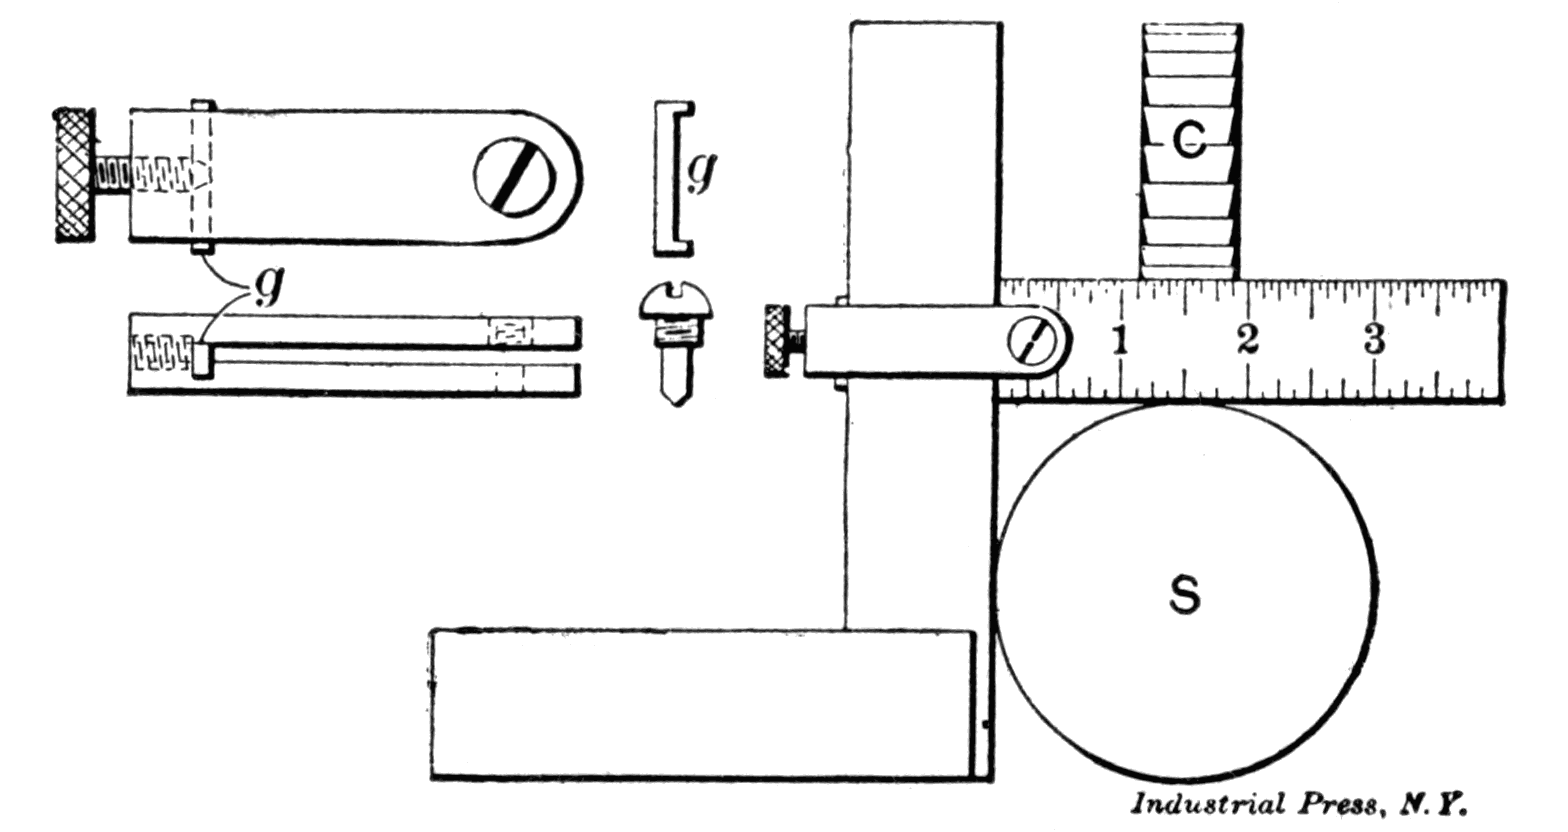 Fig. 12. Scale Attachment for the Square